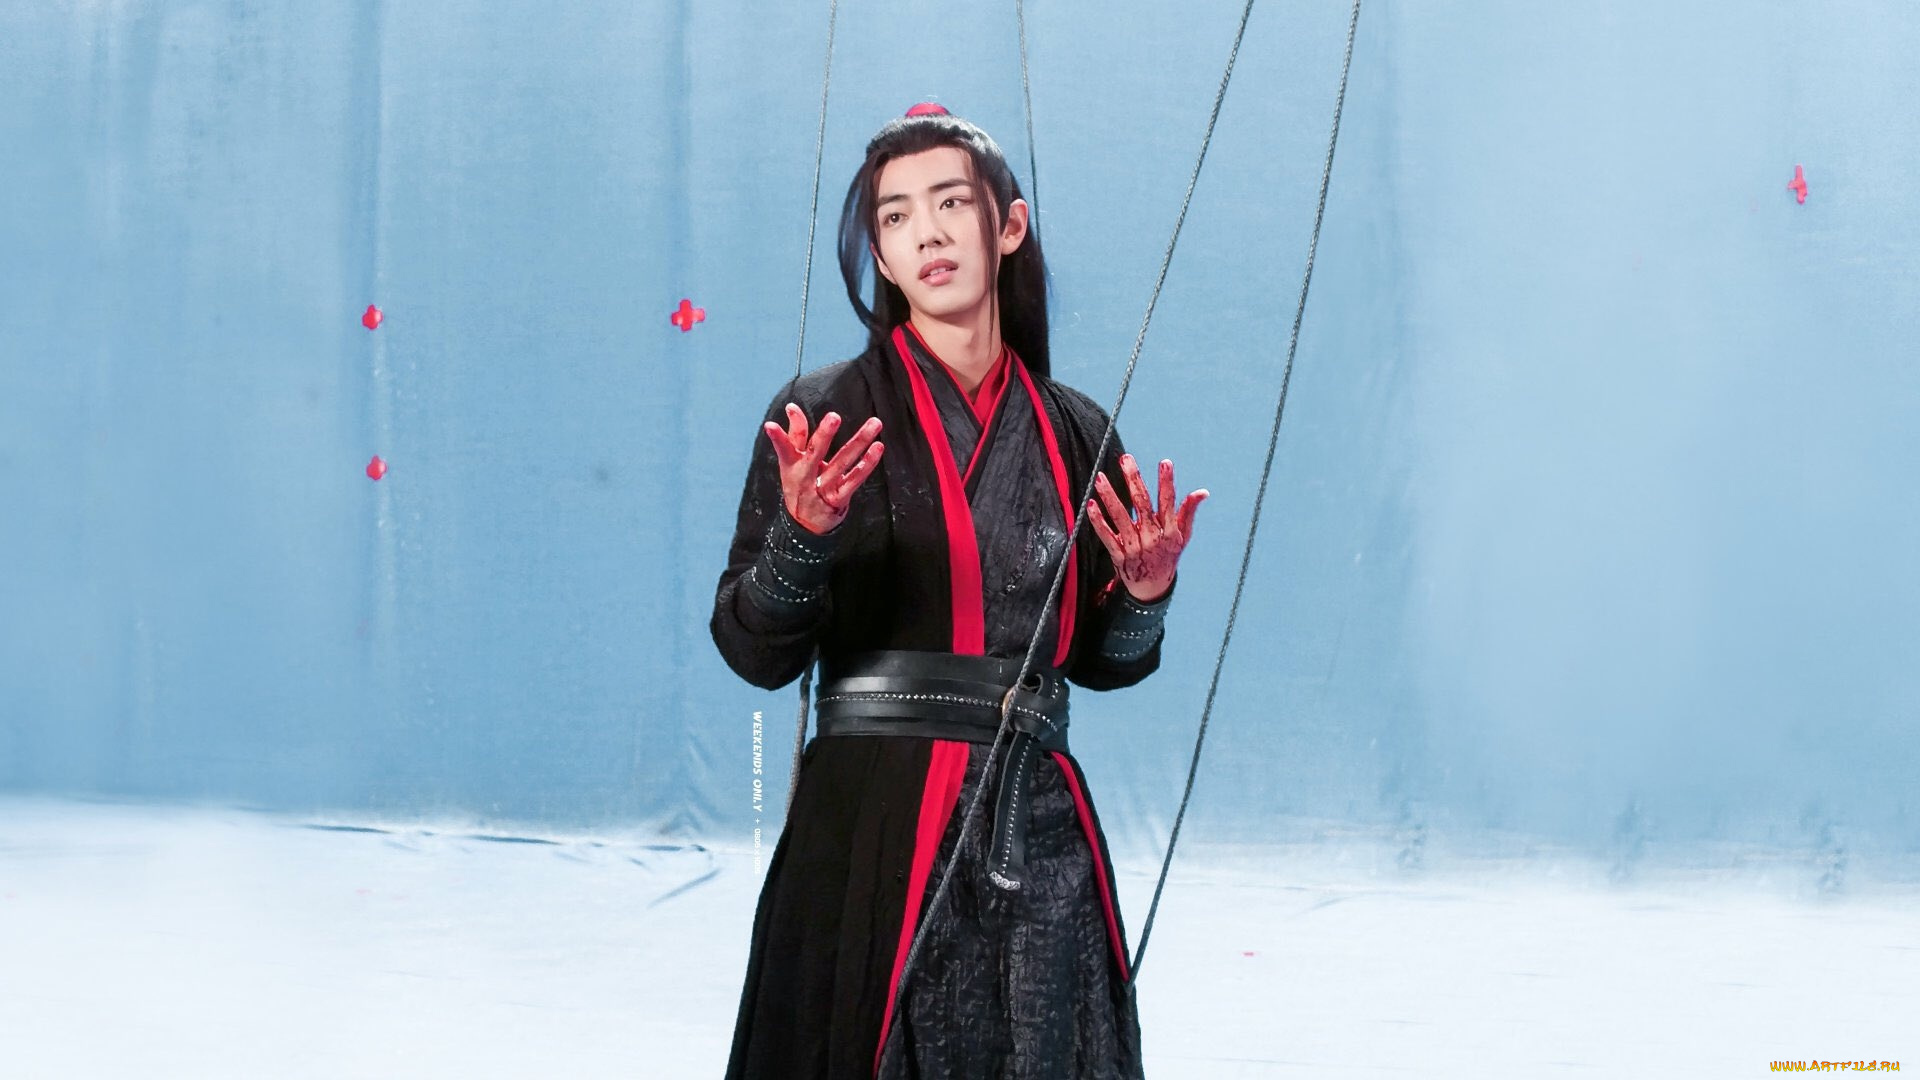 мужчины, xiao, zhan, актер, костюм, кровь, съемки, веревки